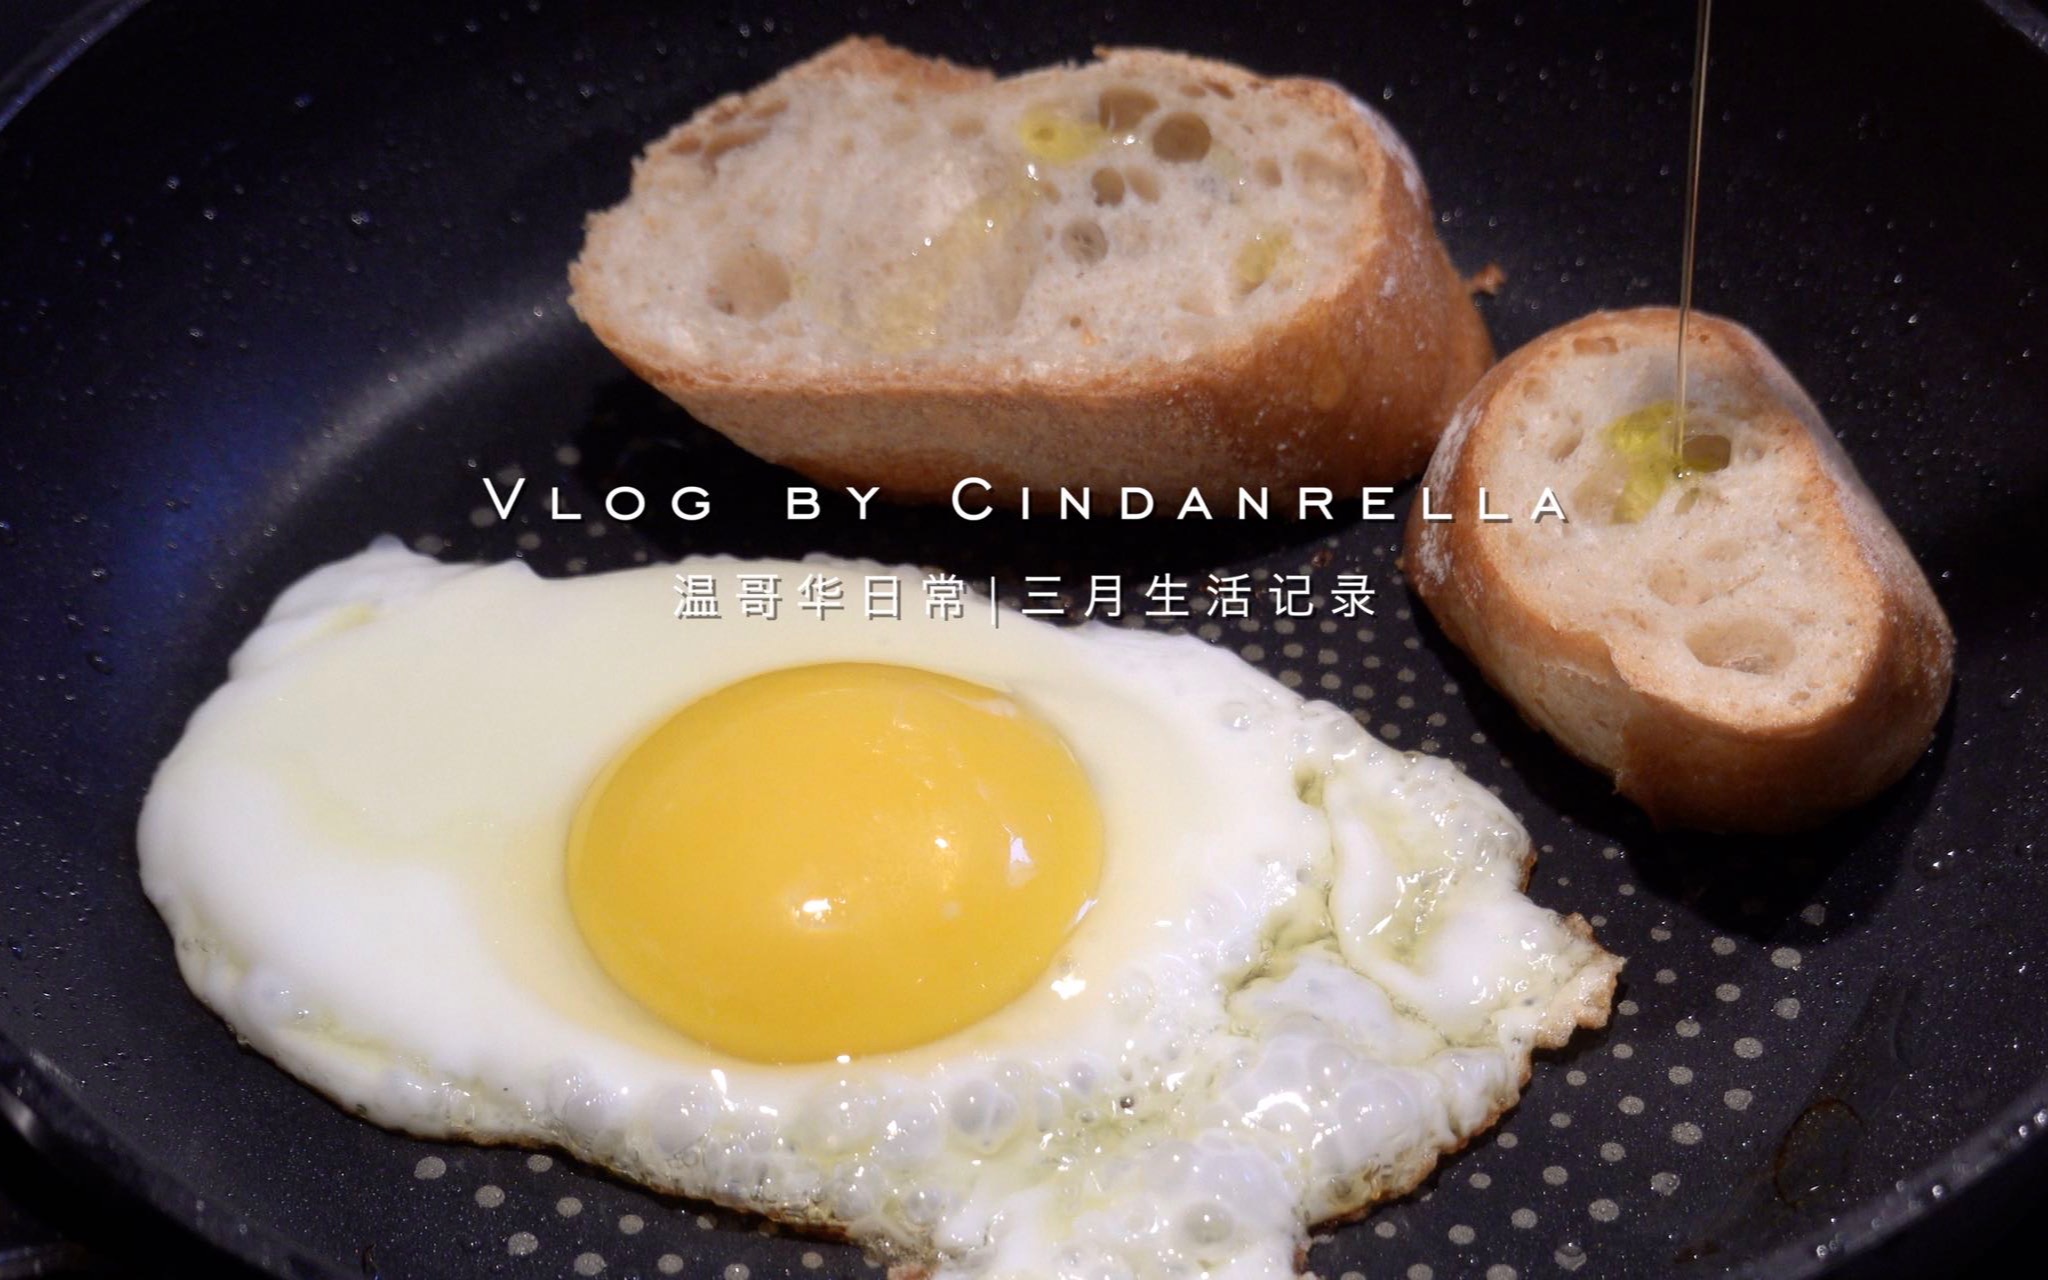 Vlog | 职场人日常生活记录 | 咖啡 | 面包 | 挂耳架 | 早餐 | 日落 | 太二酸菜鱼 | 吃吃喝喝 | Cindanrella